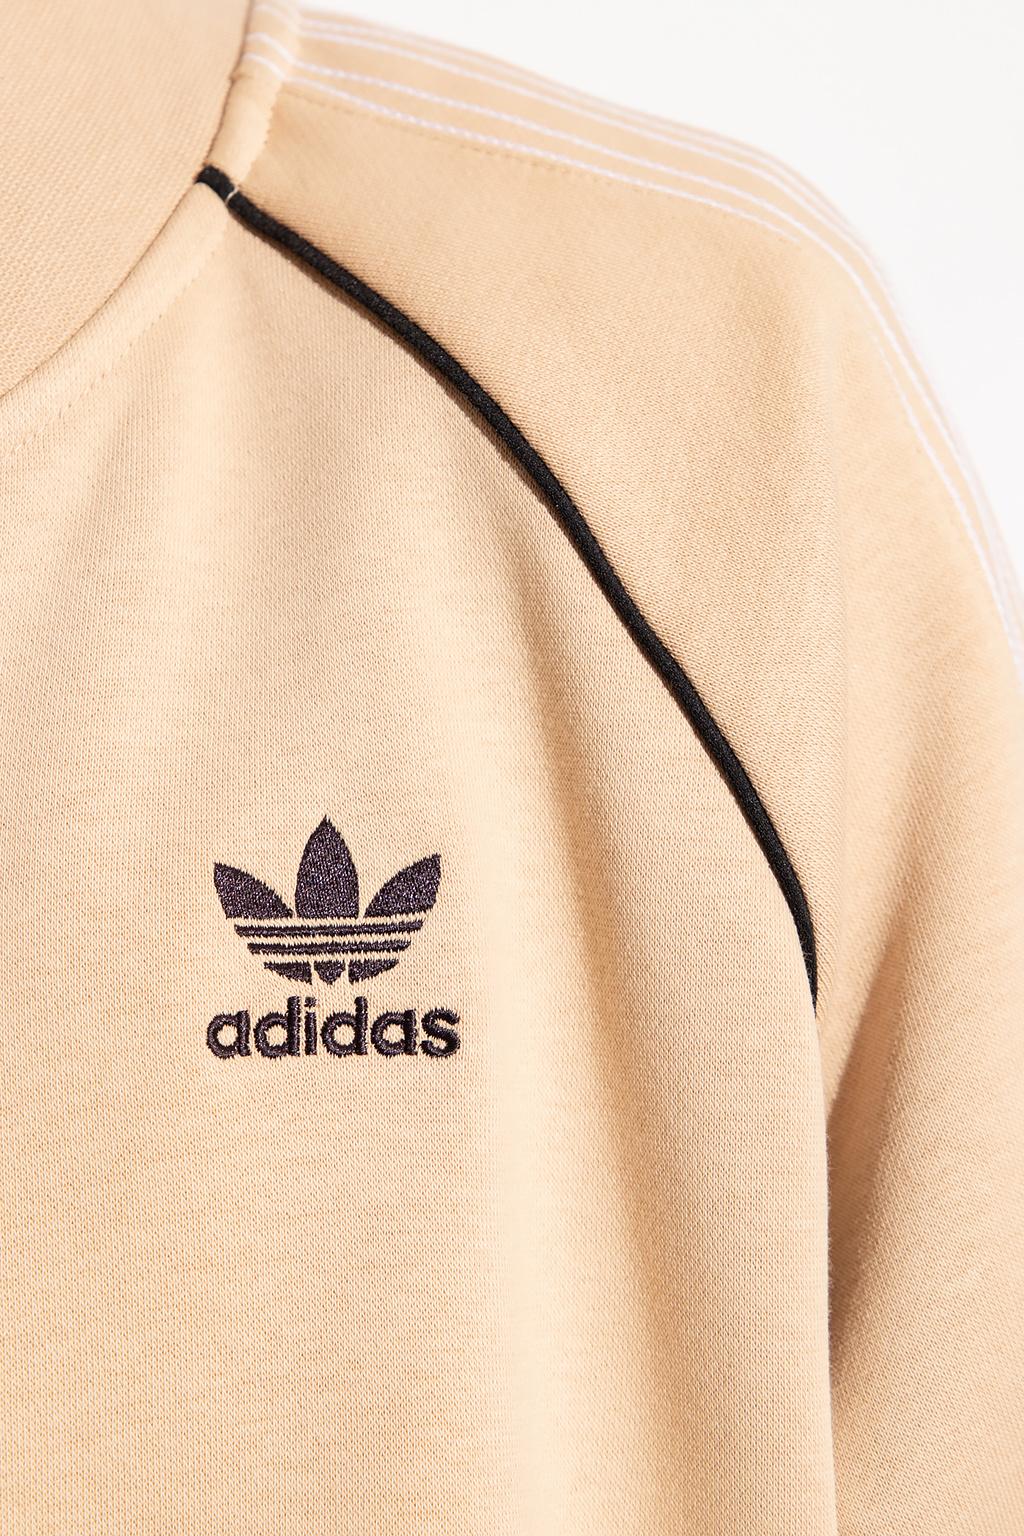 adidas Originals Sweatshirt With Logo in Natural for Men | Lyst